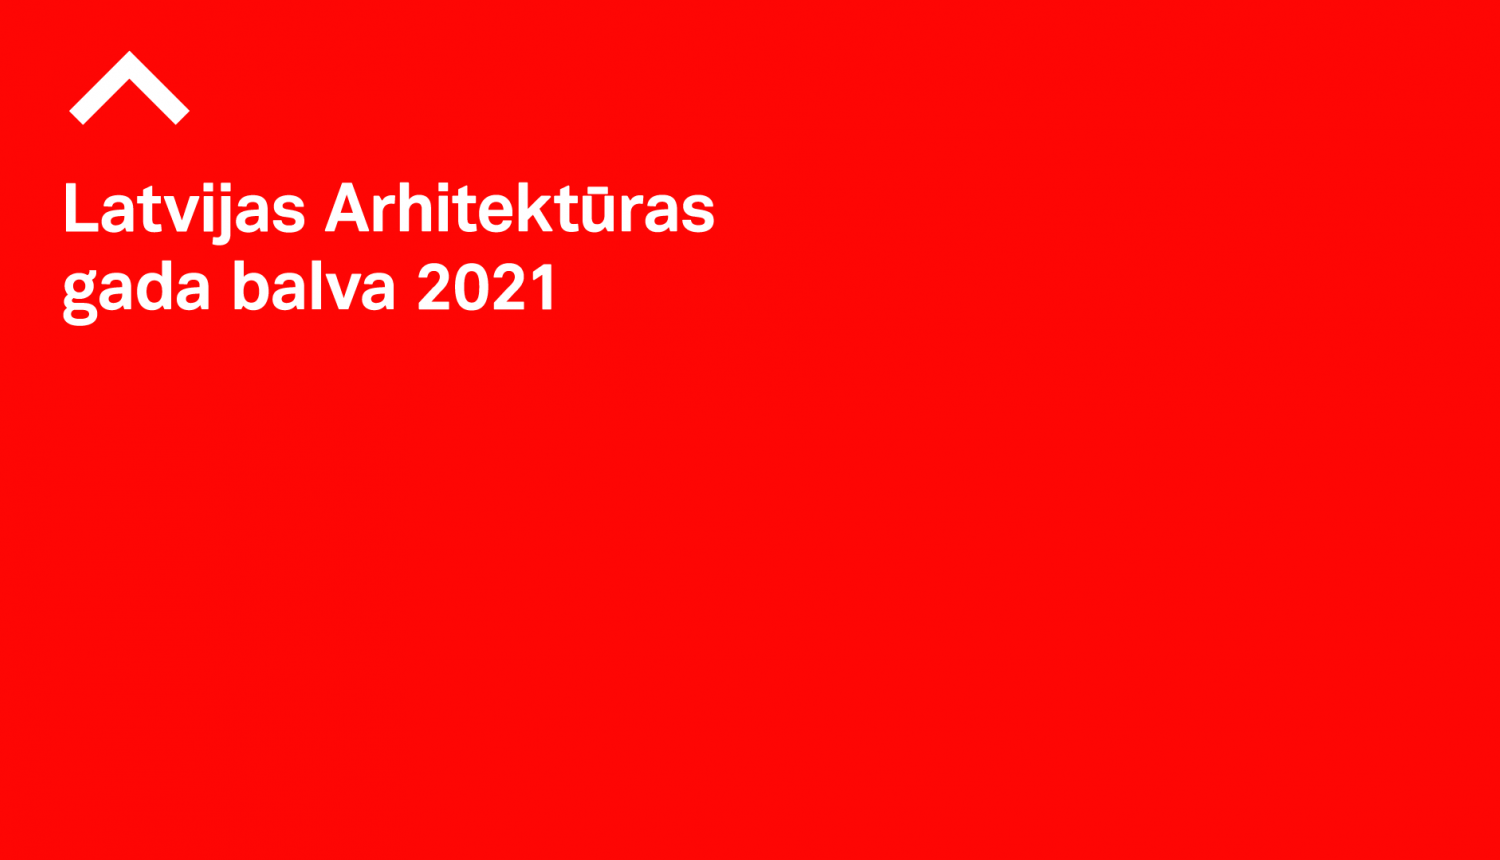 Latvijas Arhitektūras gada balvas logo.